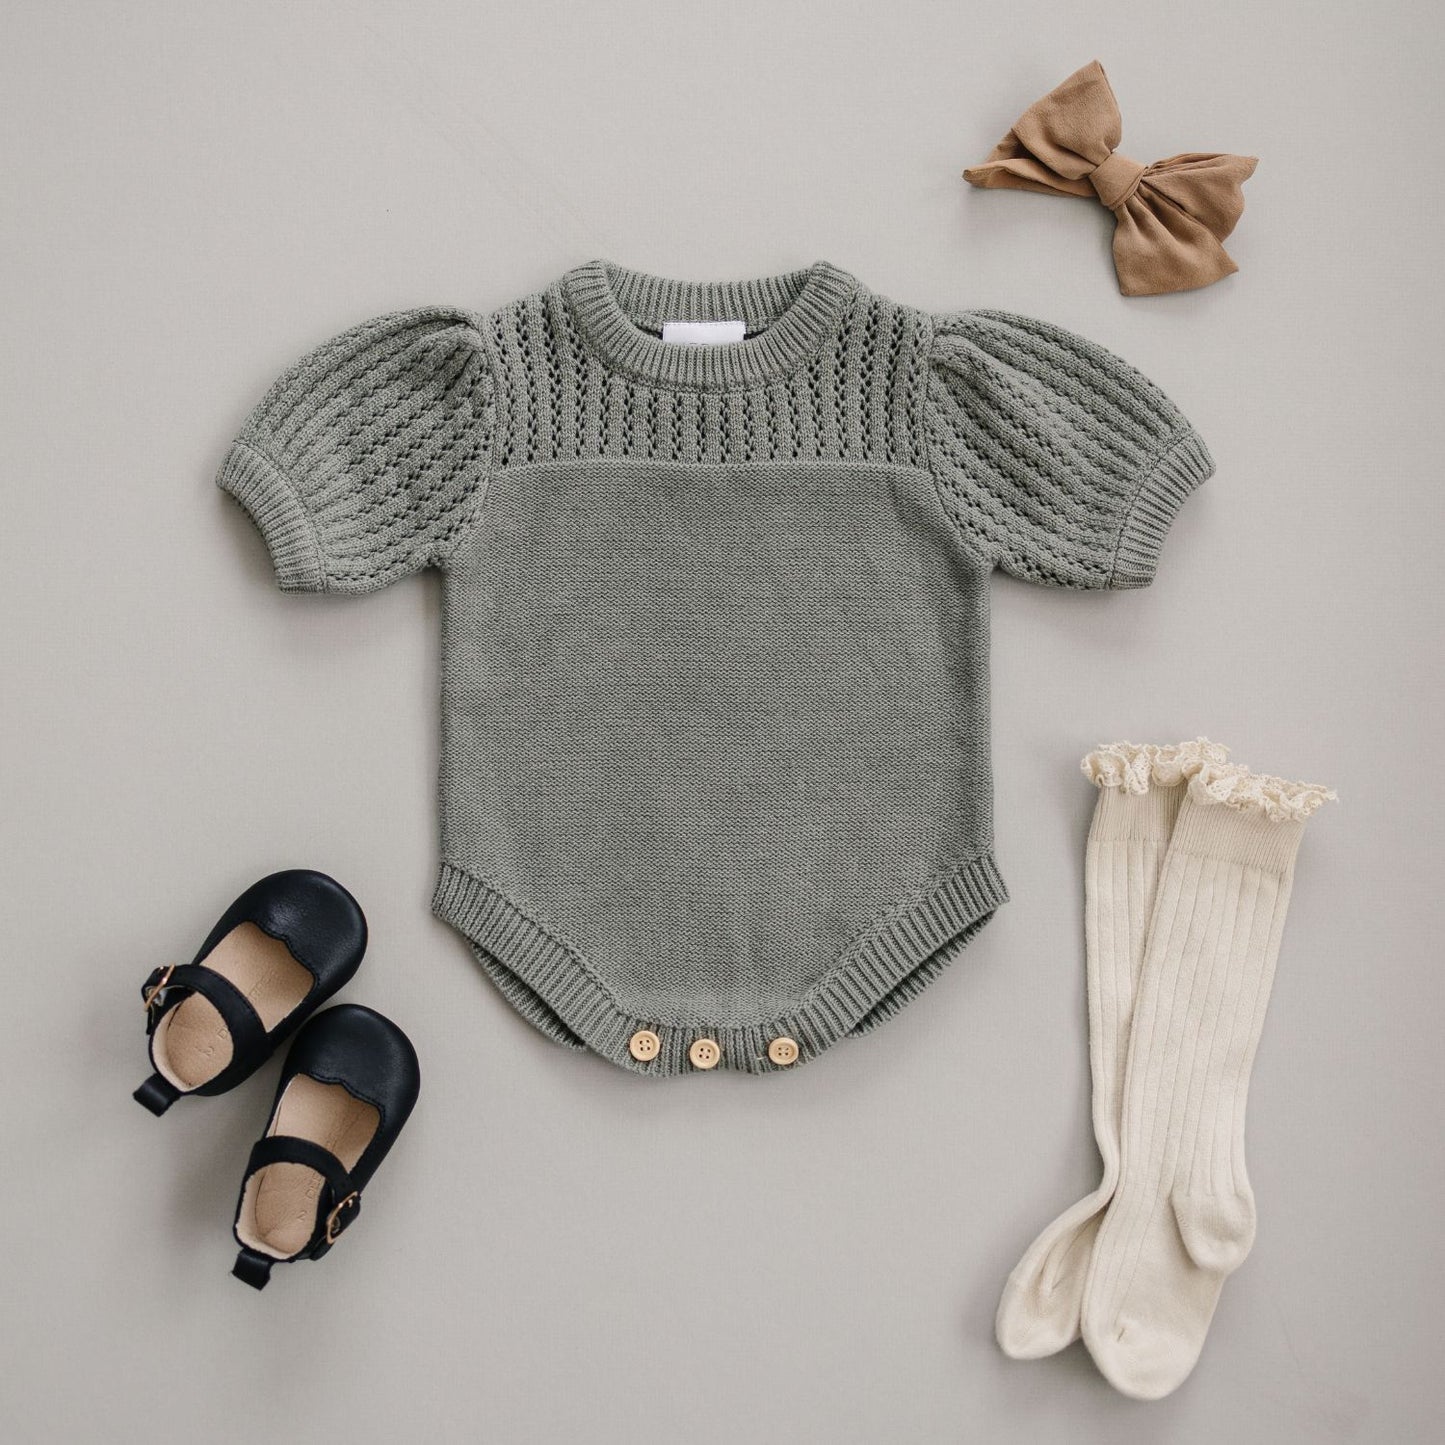 Mebie Baby Knit Shirt Romper - Sage